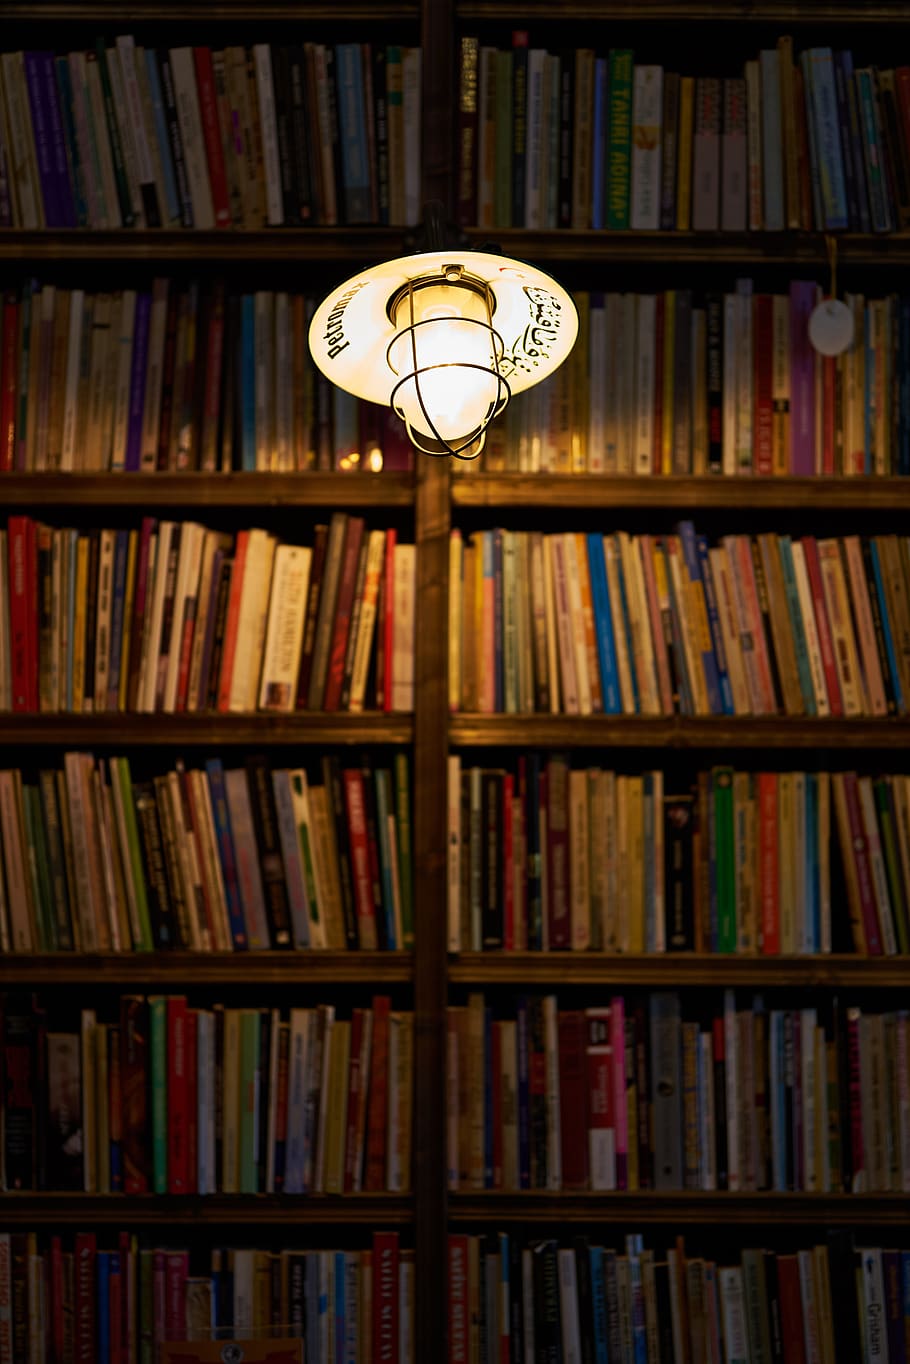 light, books, library, cafe, decor, read, book, romantic, literature, education